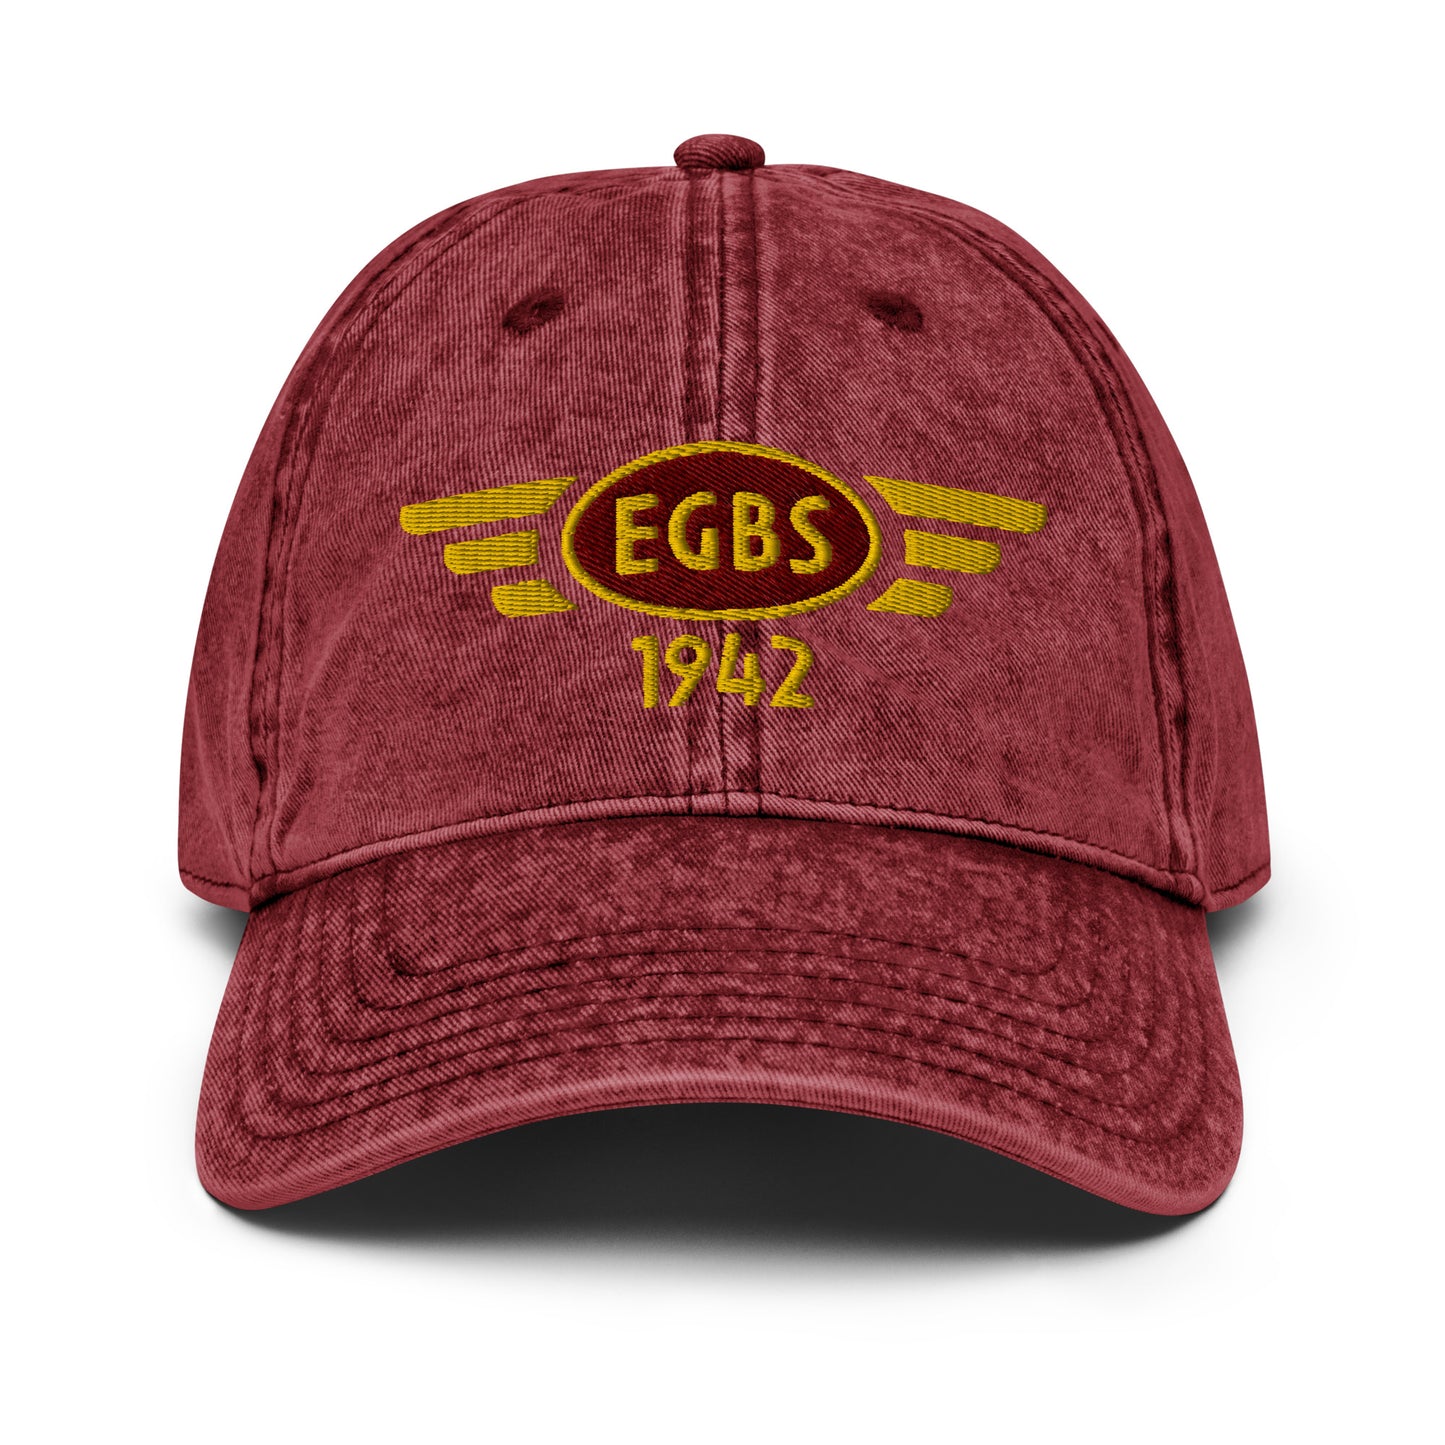 Burgundy coloured cotton twill baseball cap with embroidered vintage style aviation logo for Shobdon Aerodrome.